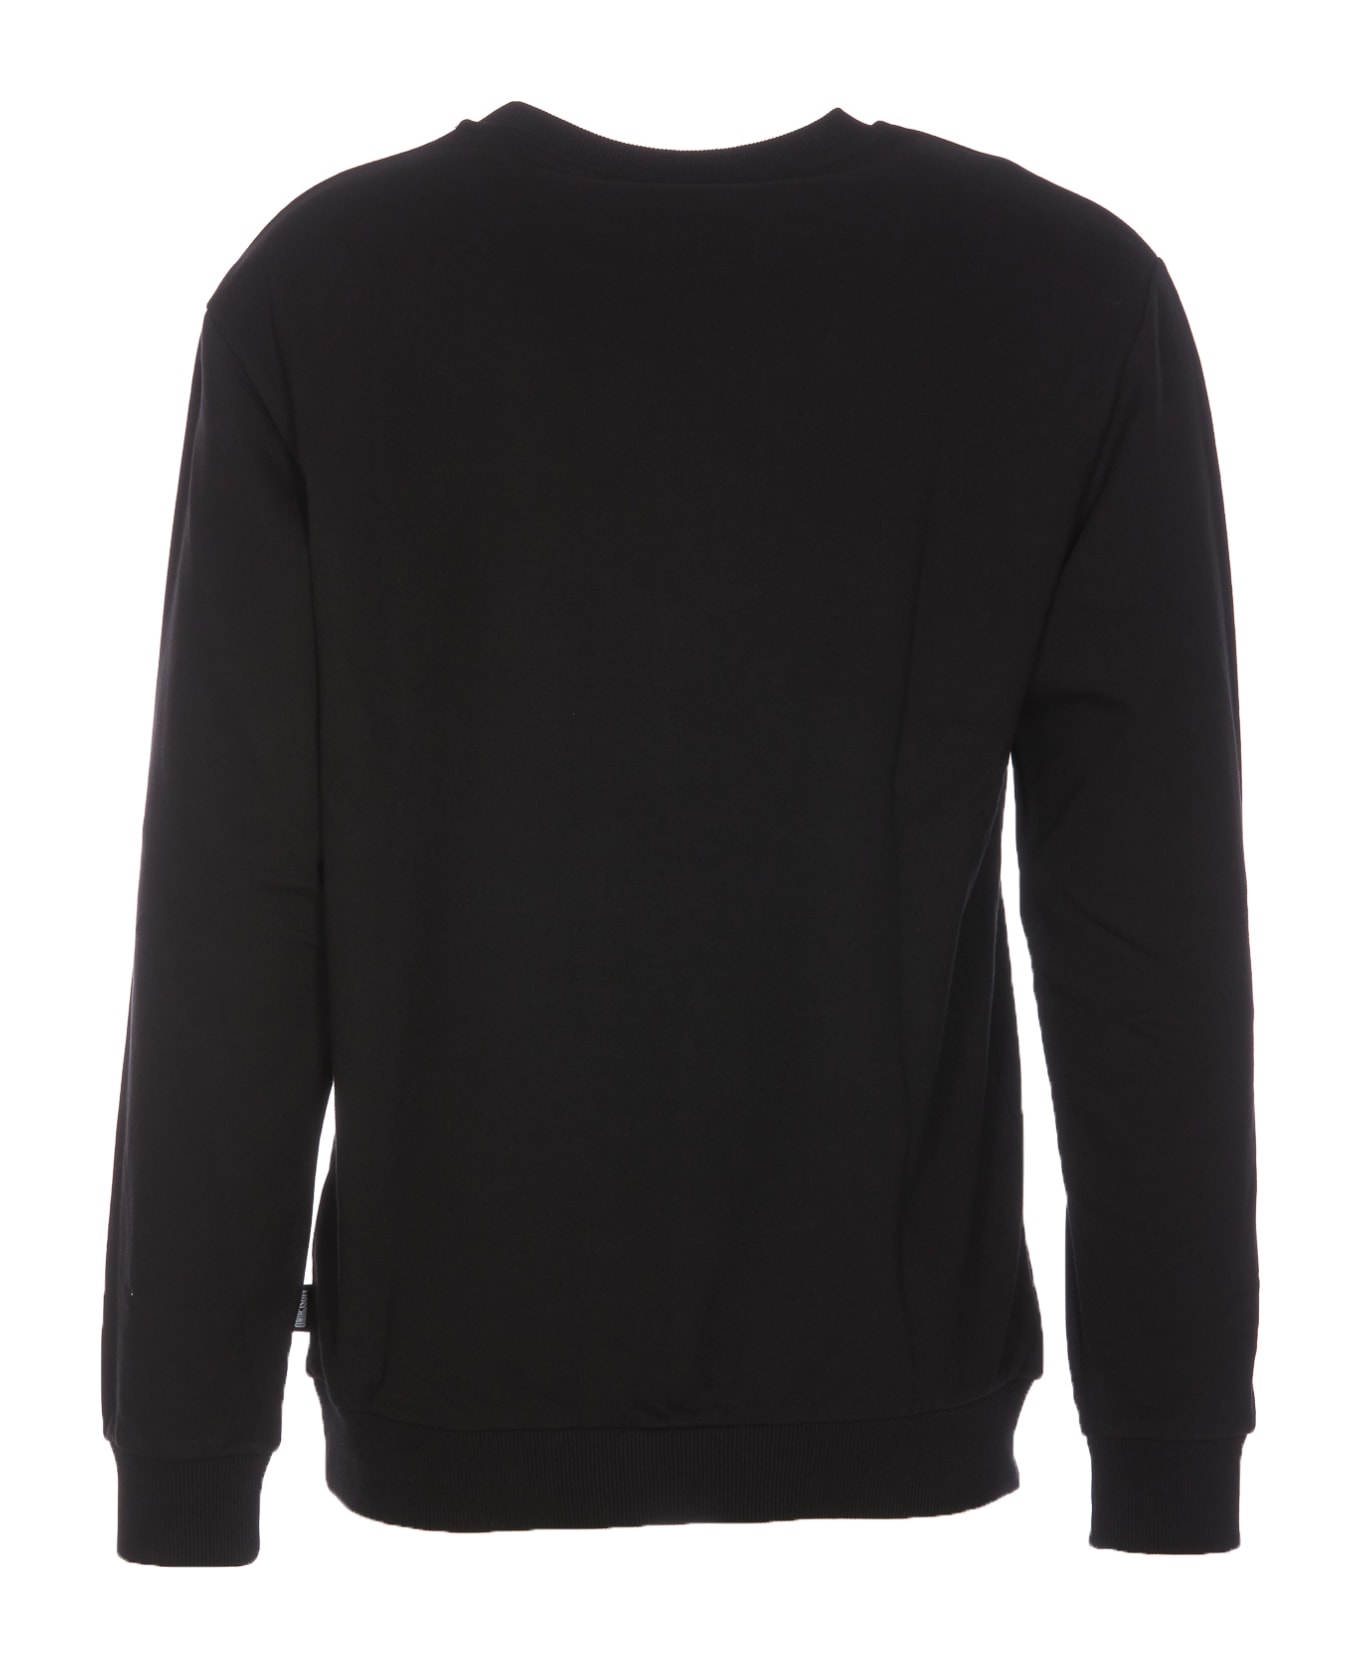 Moschino Underbear Logo Sweatshirt - Black